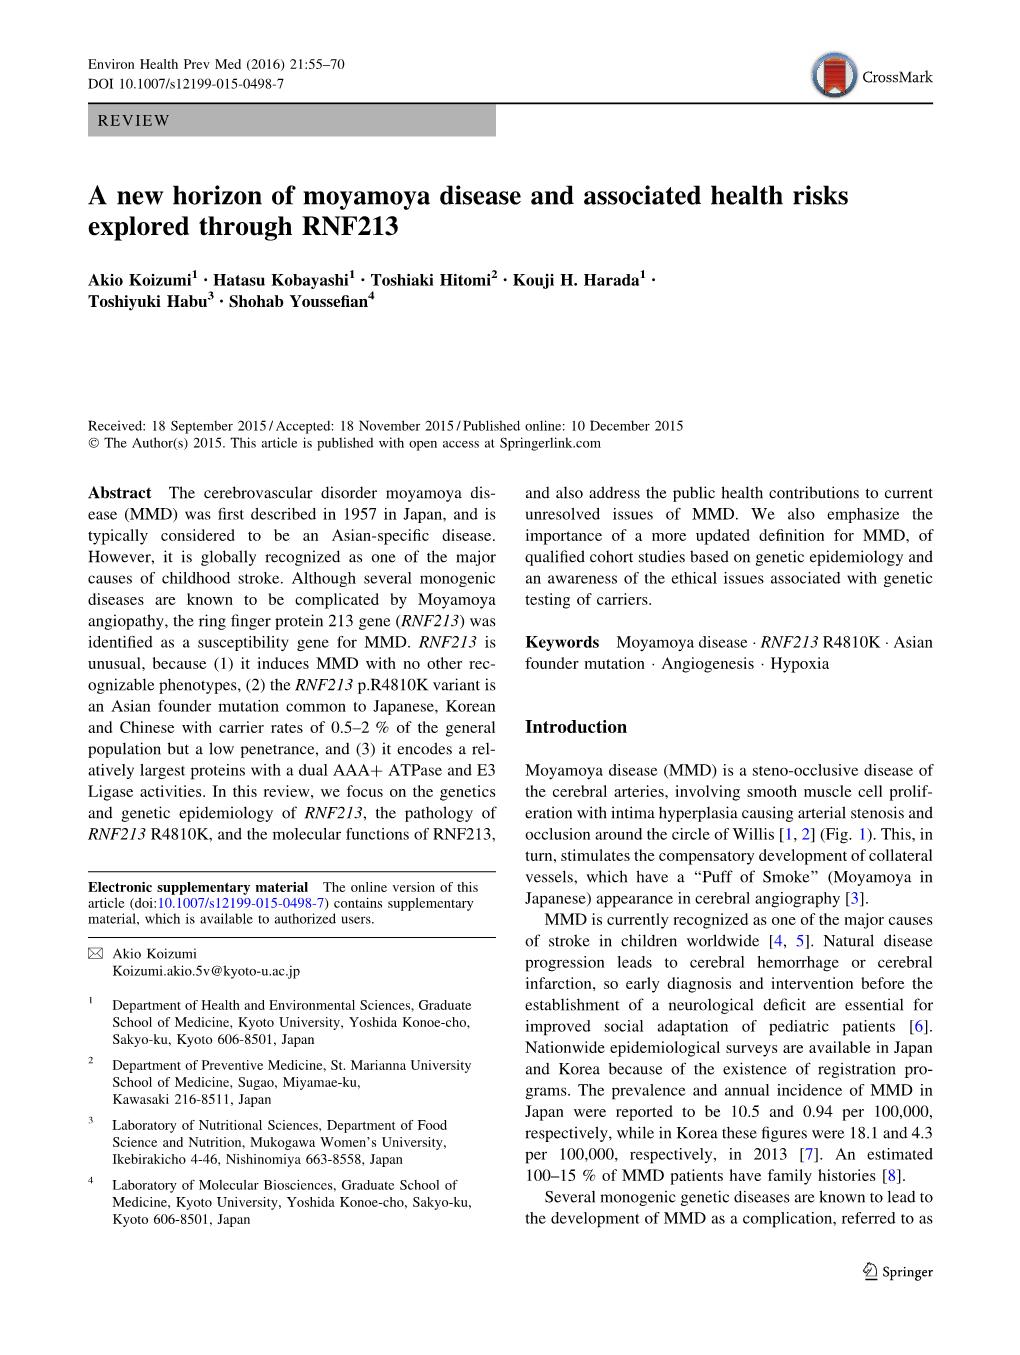 A New Horizon of Moyamoya Disease and Associated Health Risks Explored Through RNF213